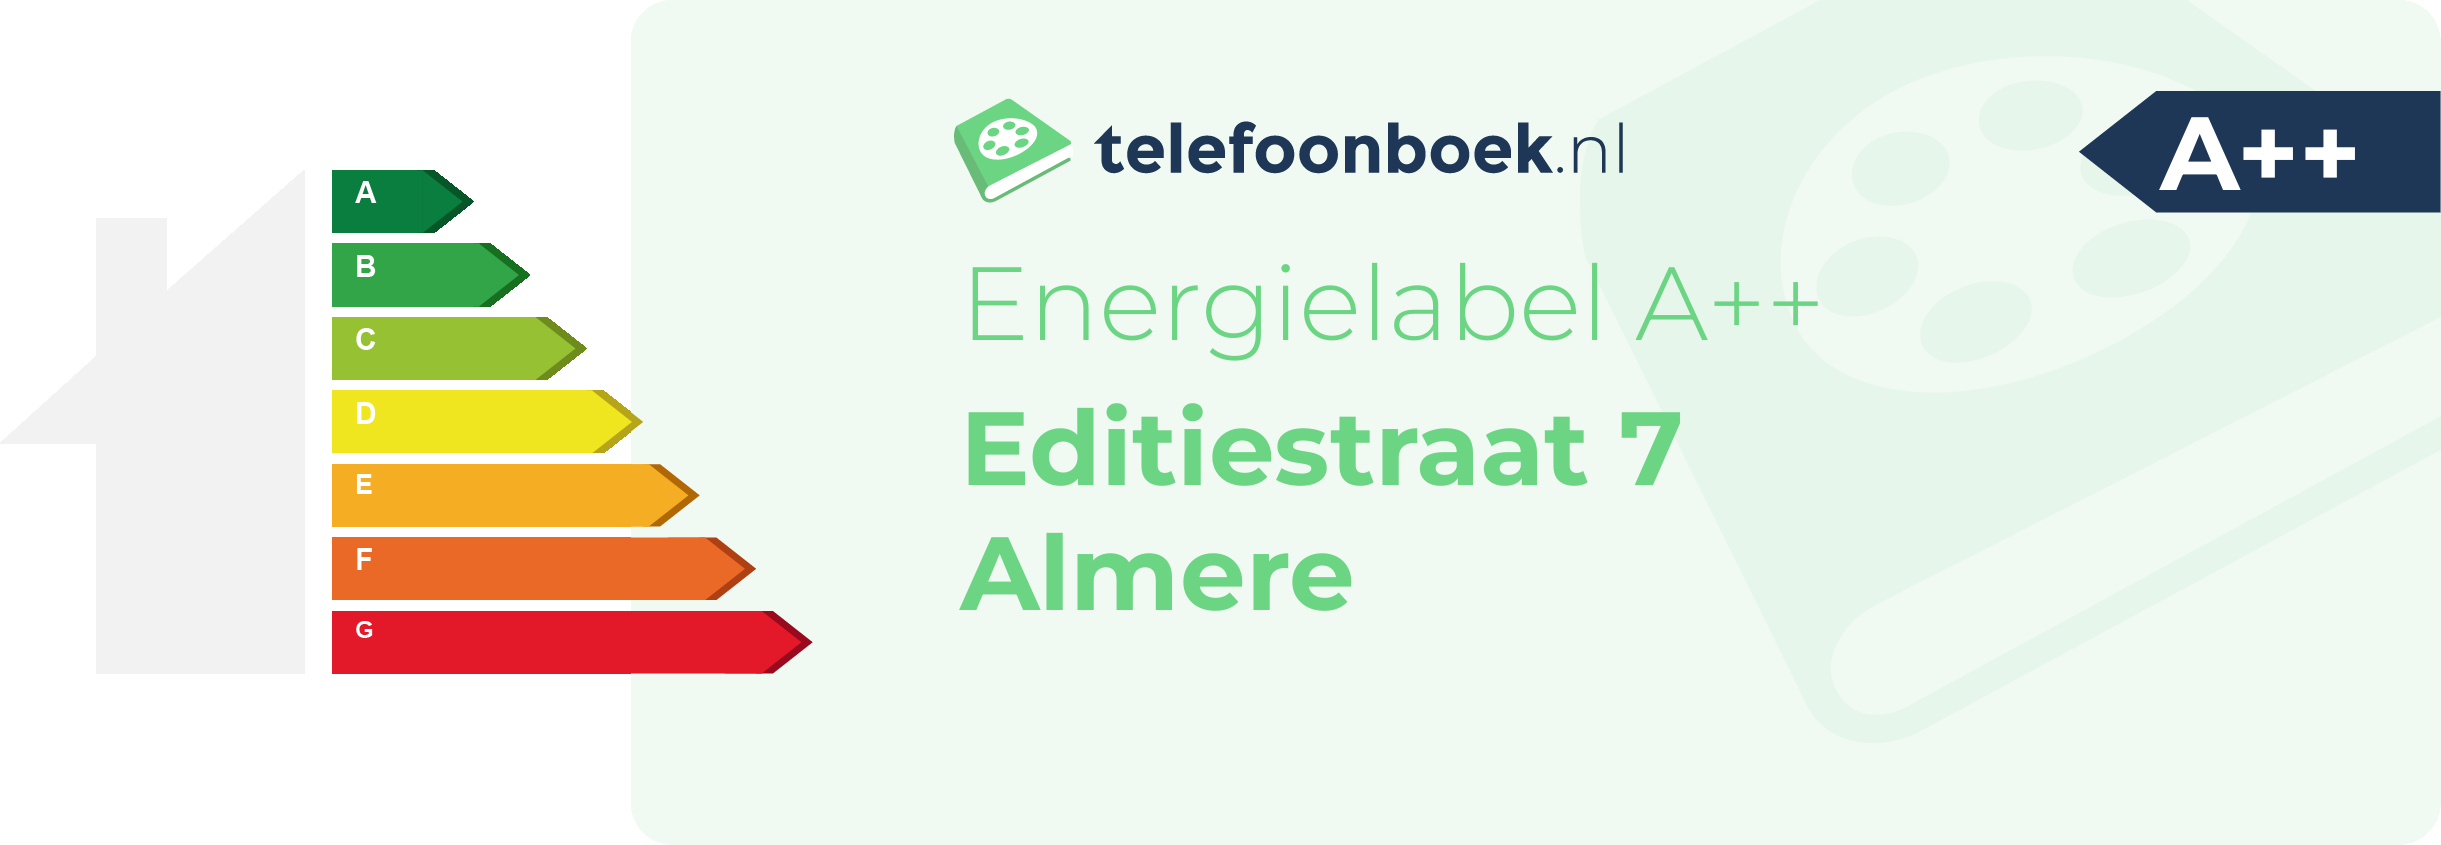 Energielabel Editiestraat 7 Almere